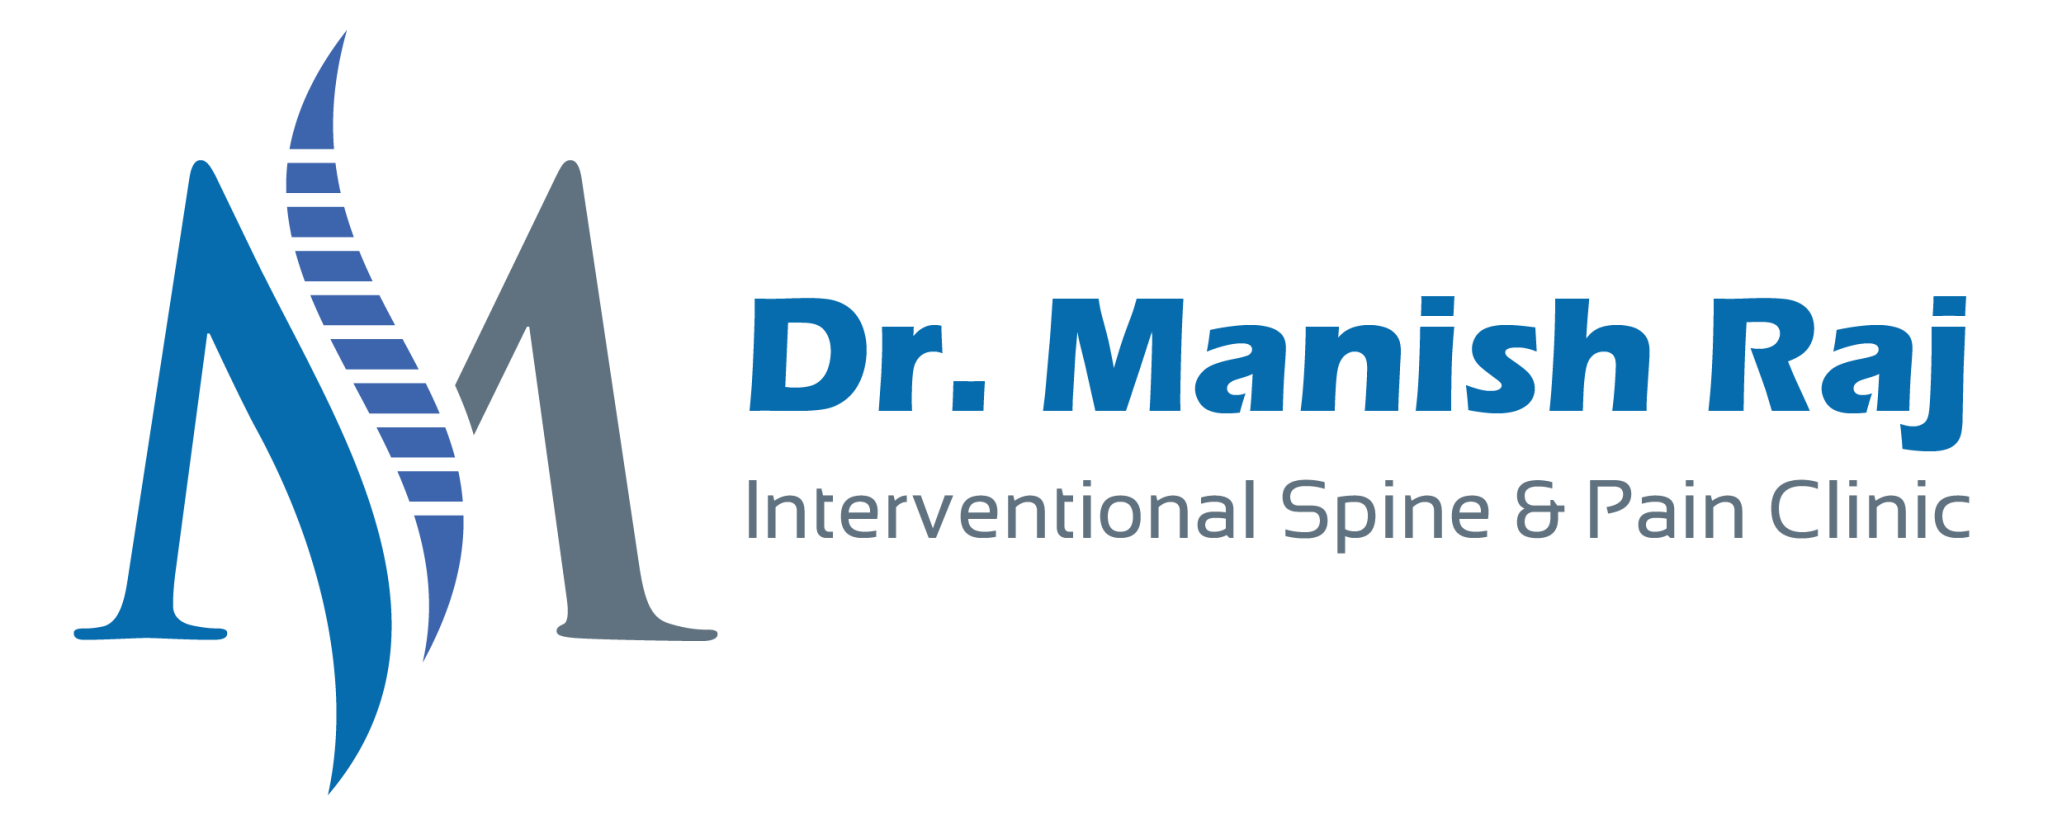 Dr. Manish Raj – Interventional Spine & Pain Clinic